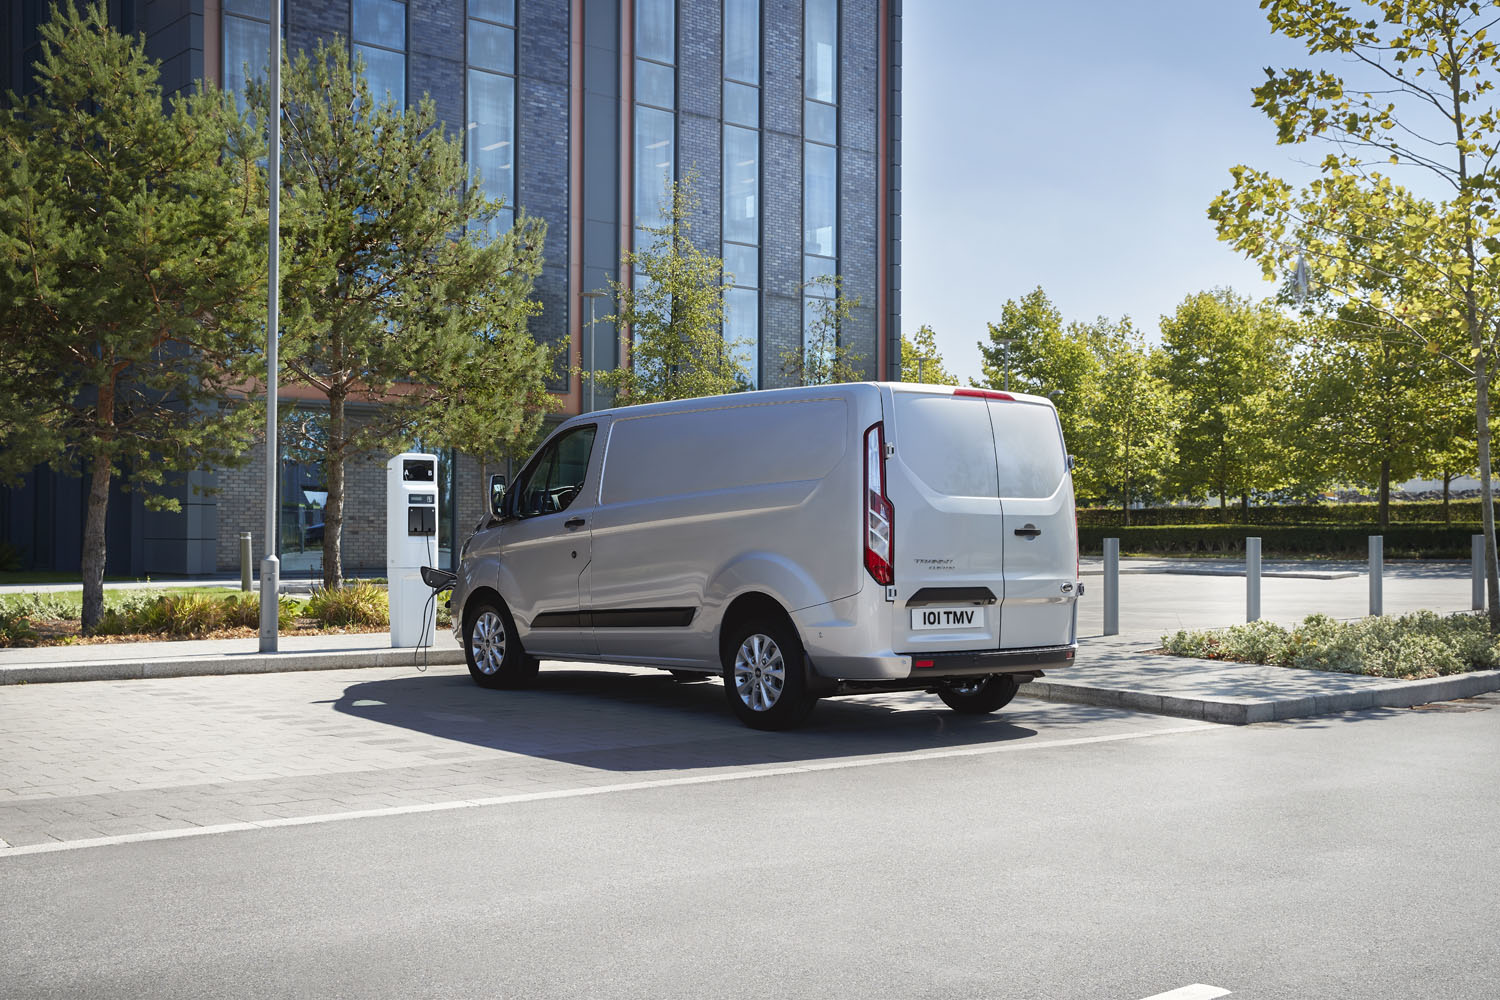 Transit Custom Hybrid Vans Help Improve Quality